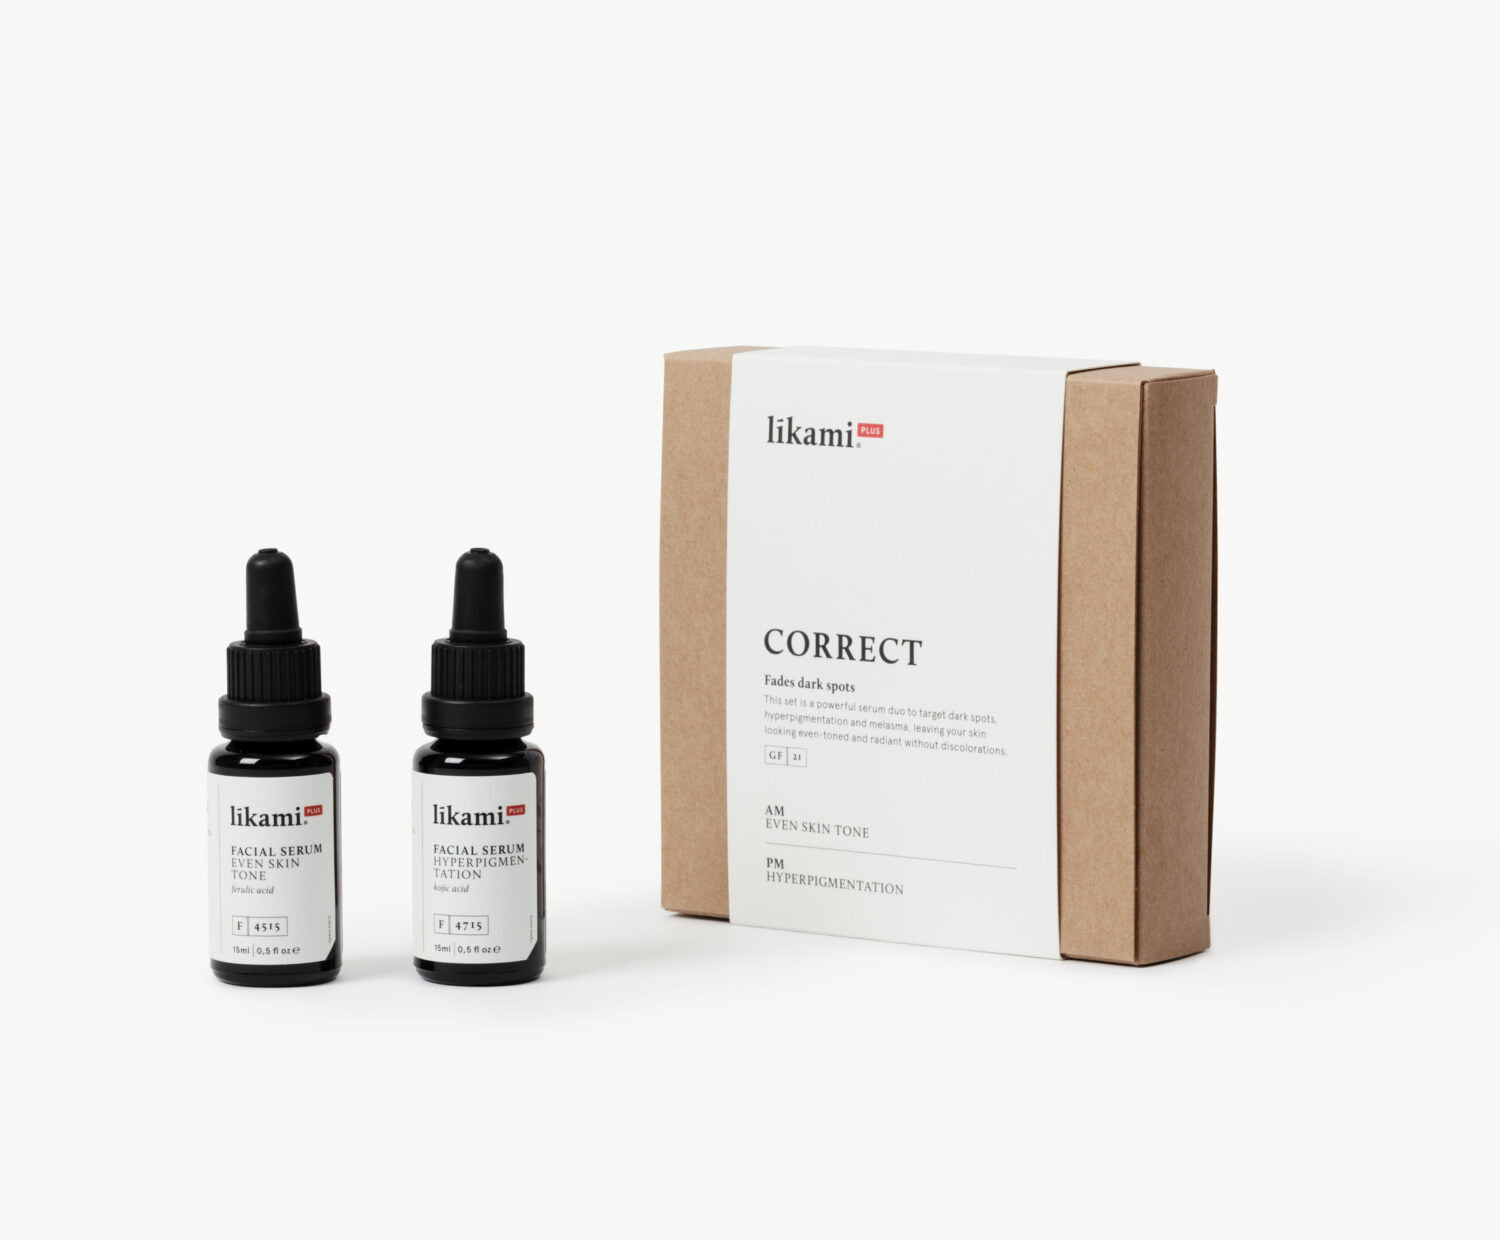 Likami plus - CORRECT serum set // focus dark spots, pigmentation